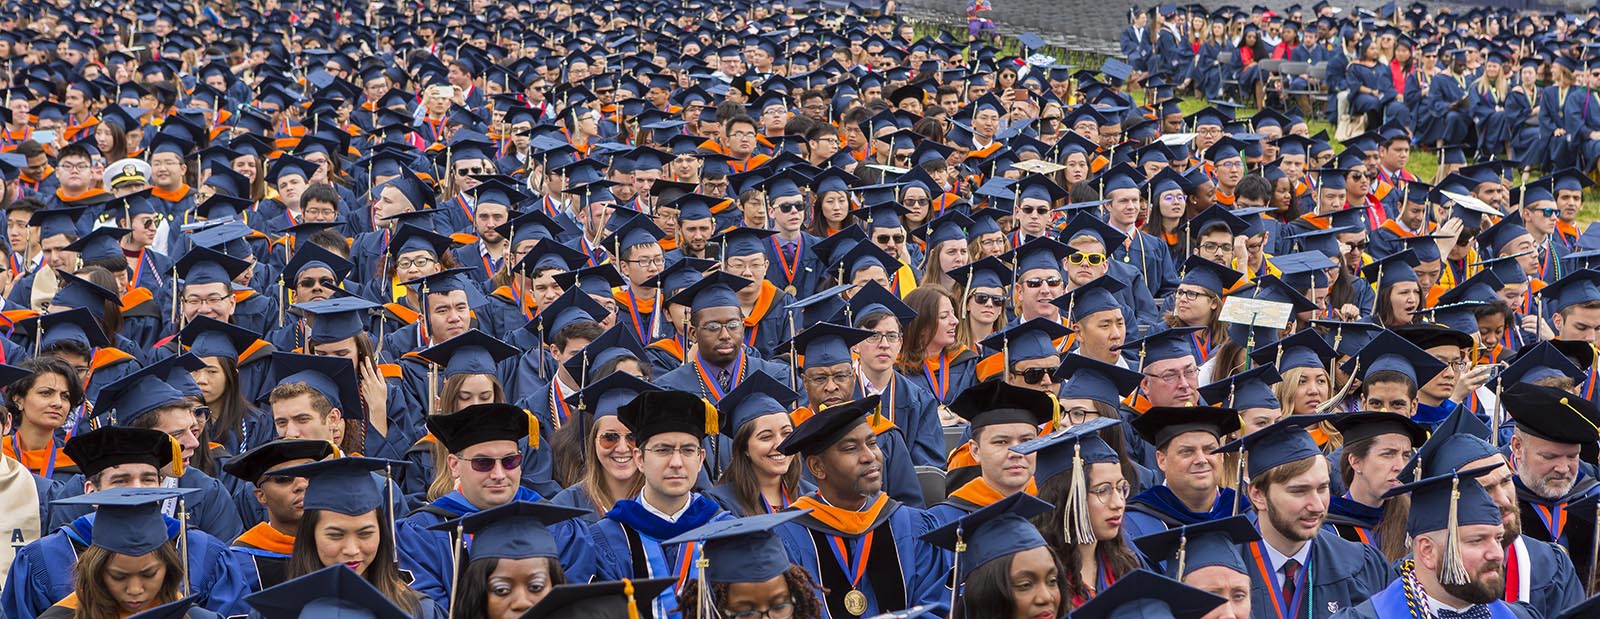 טקס סיום קולג' באוניברסיטת גורג' וושינגטון, בוושינגטון די. סי. מאי 2017. (צילום: Rob Crandall / Shutterstock.com)